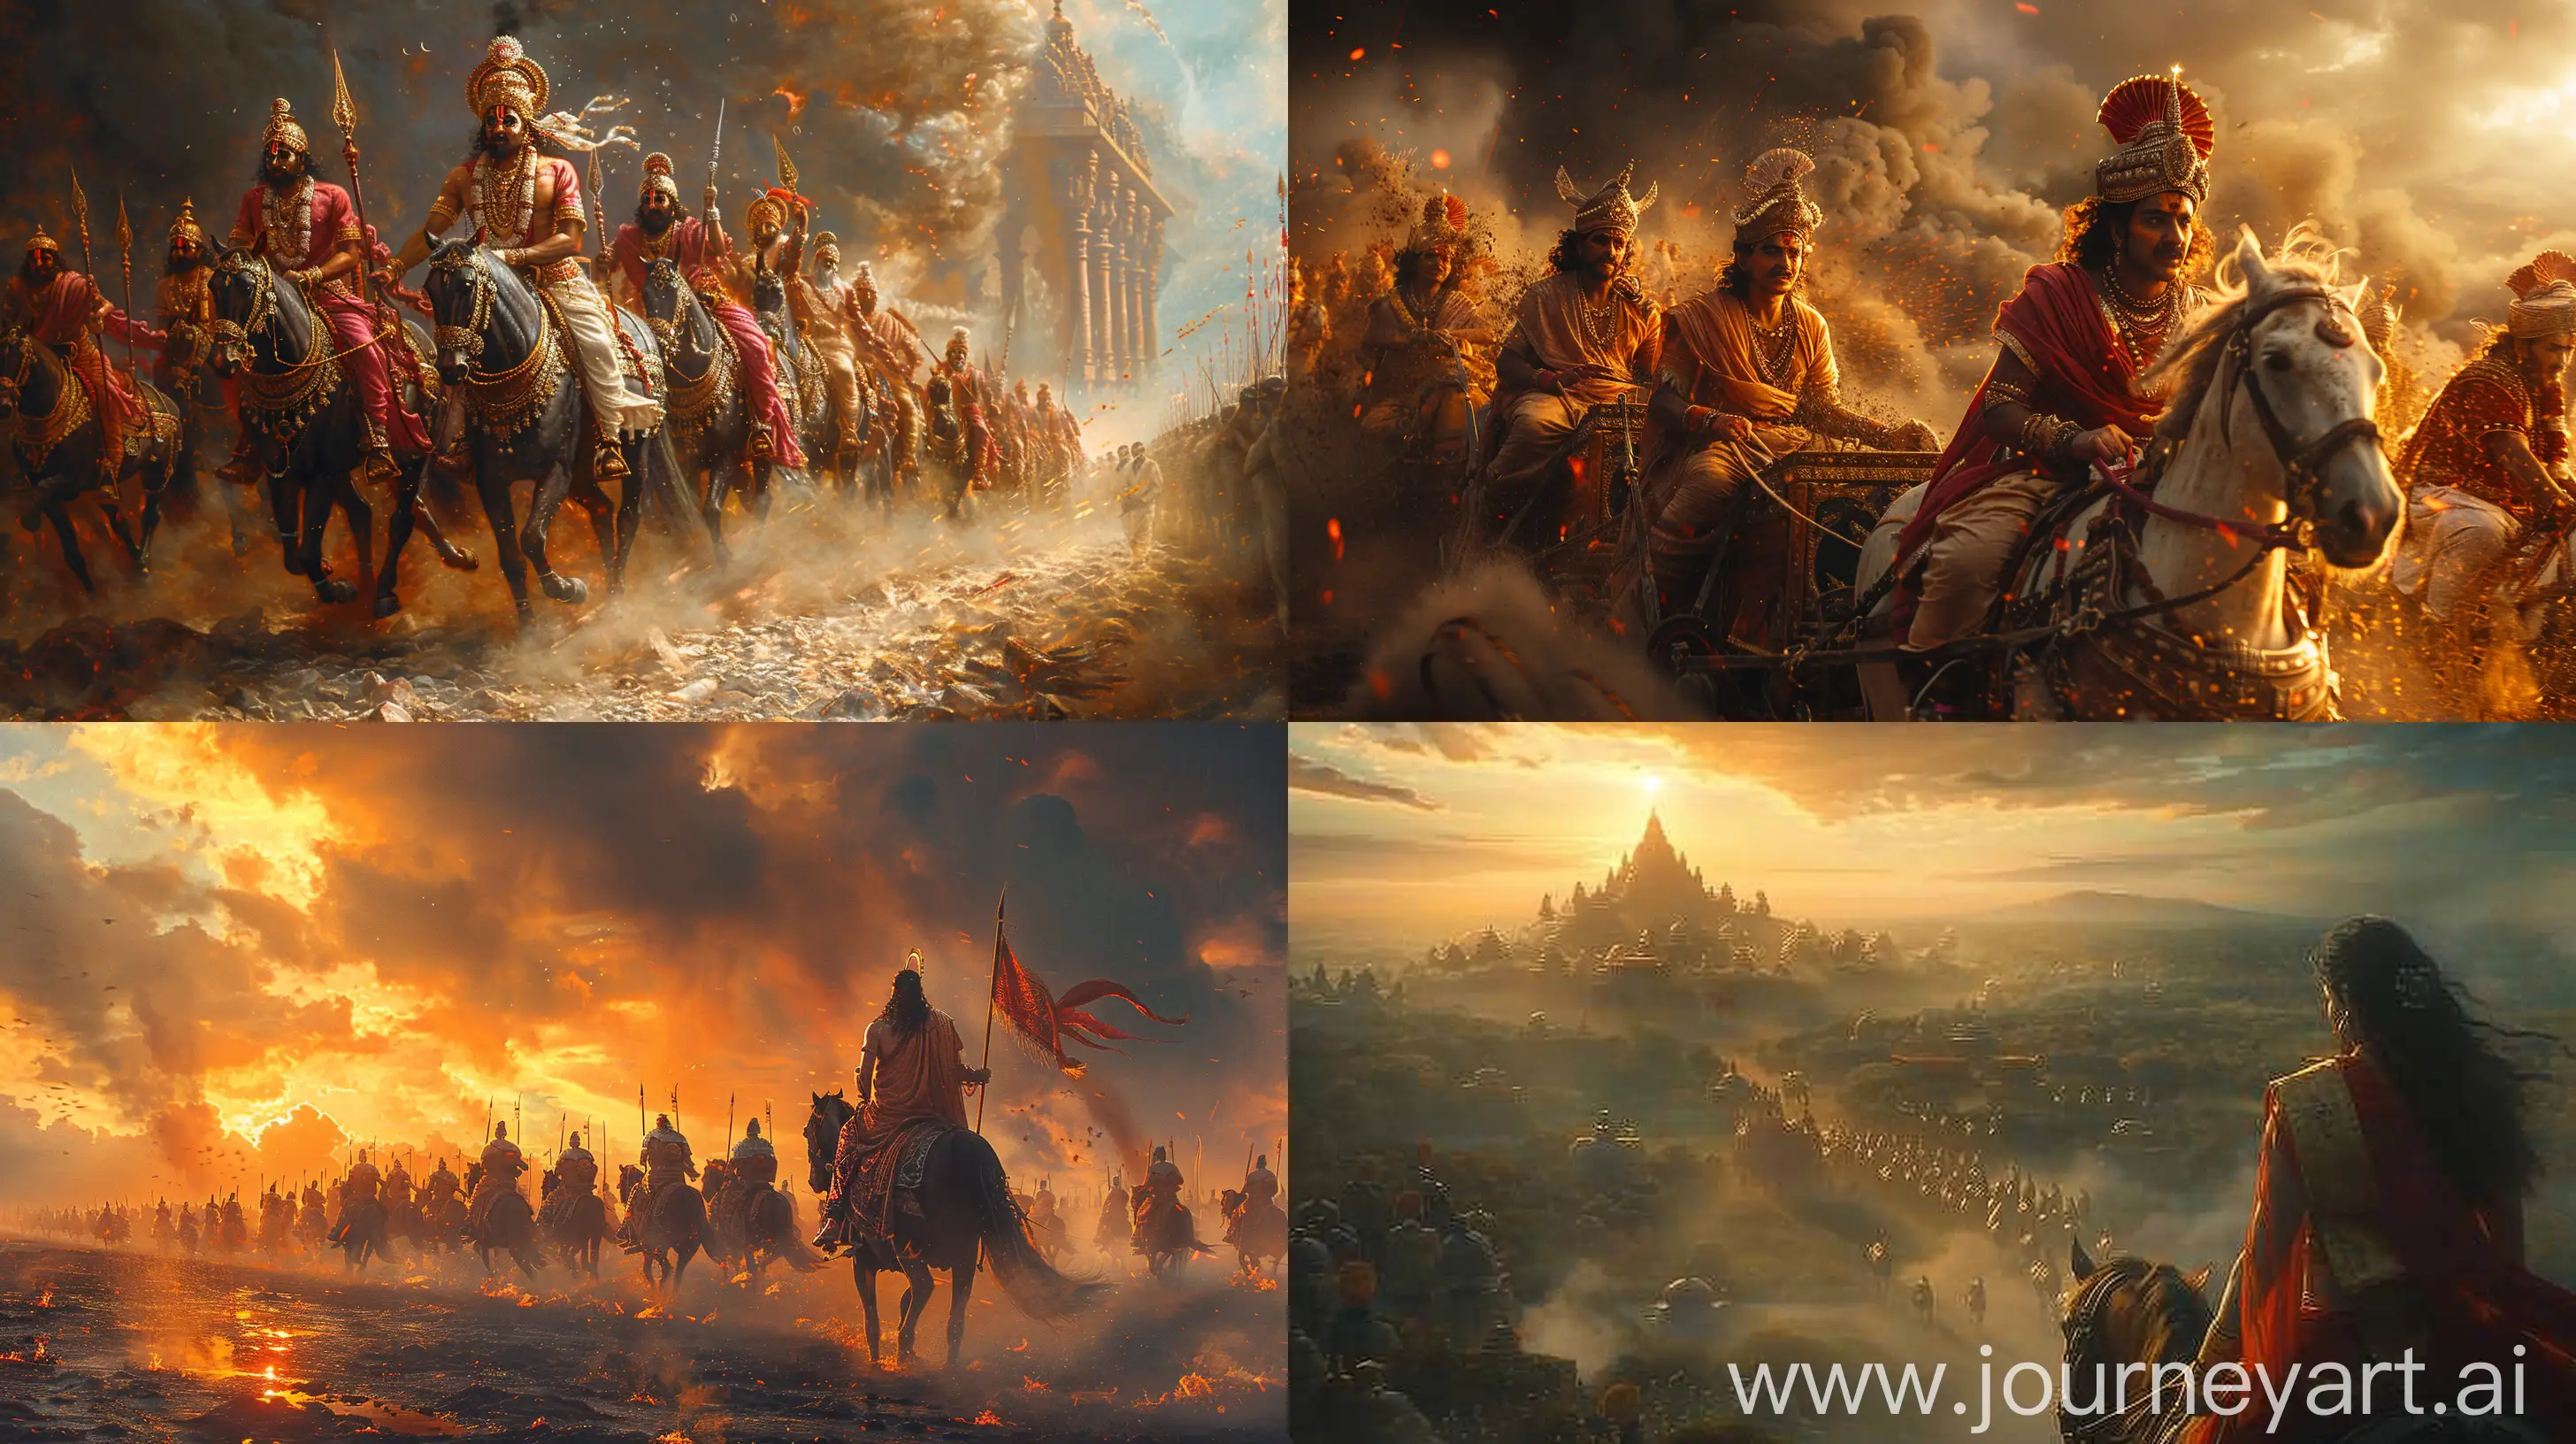 Lord-Krishna-Leading-Arjun-in-Kurukshetra-Battle-Scene-with-Chariots-and-Warriors